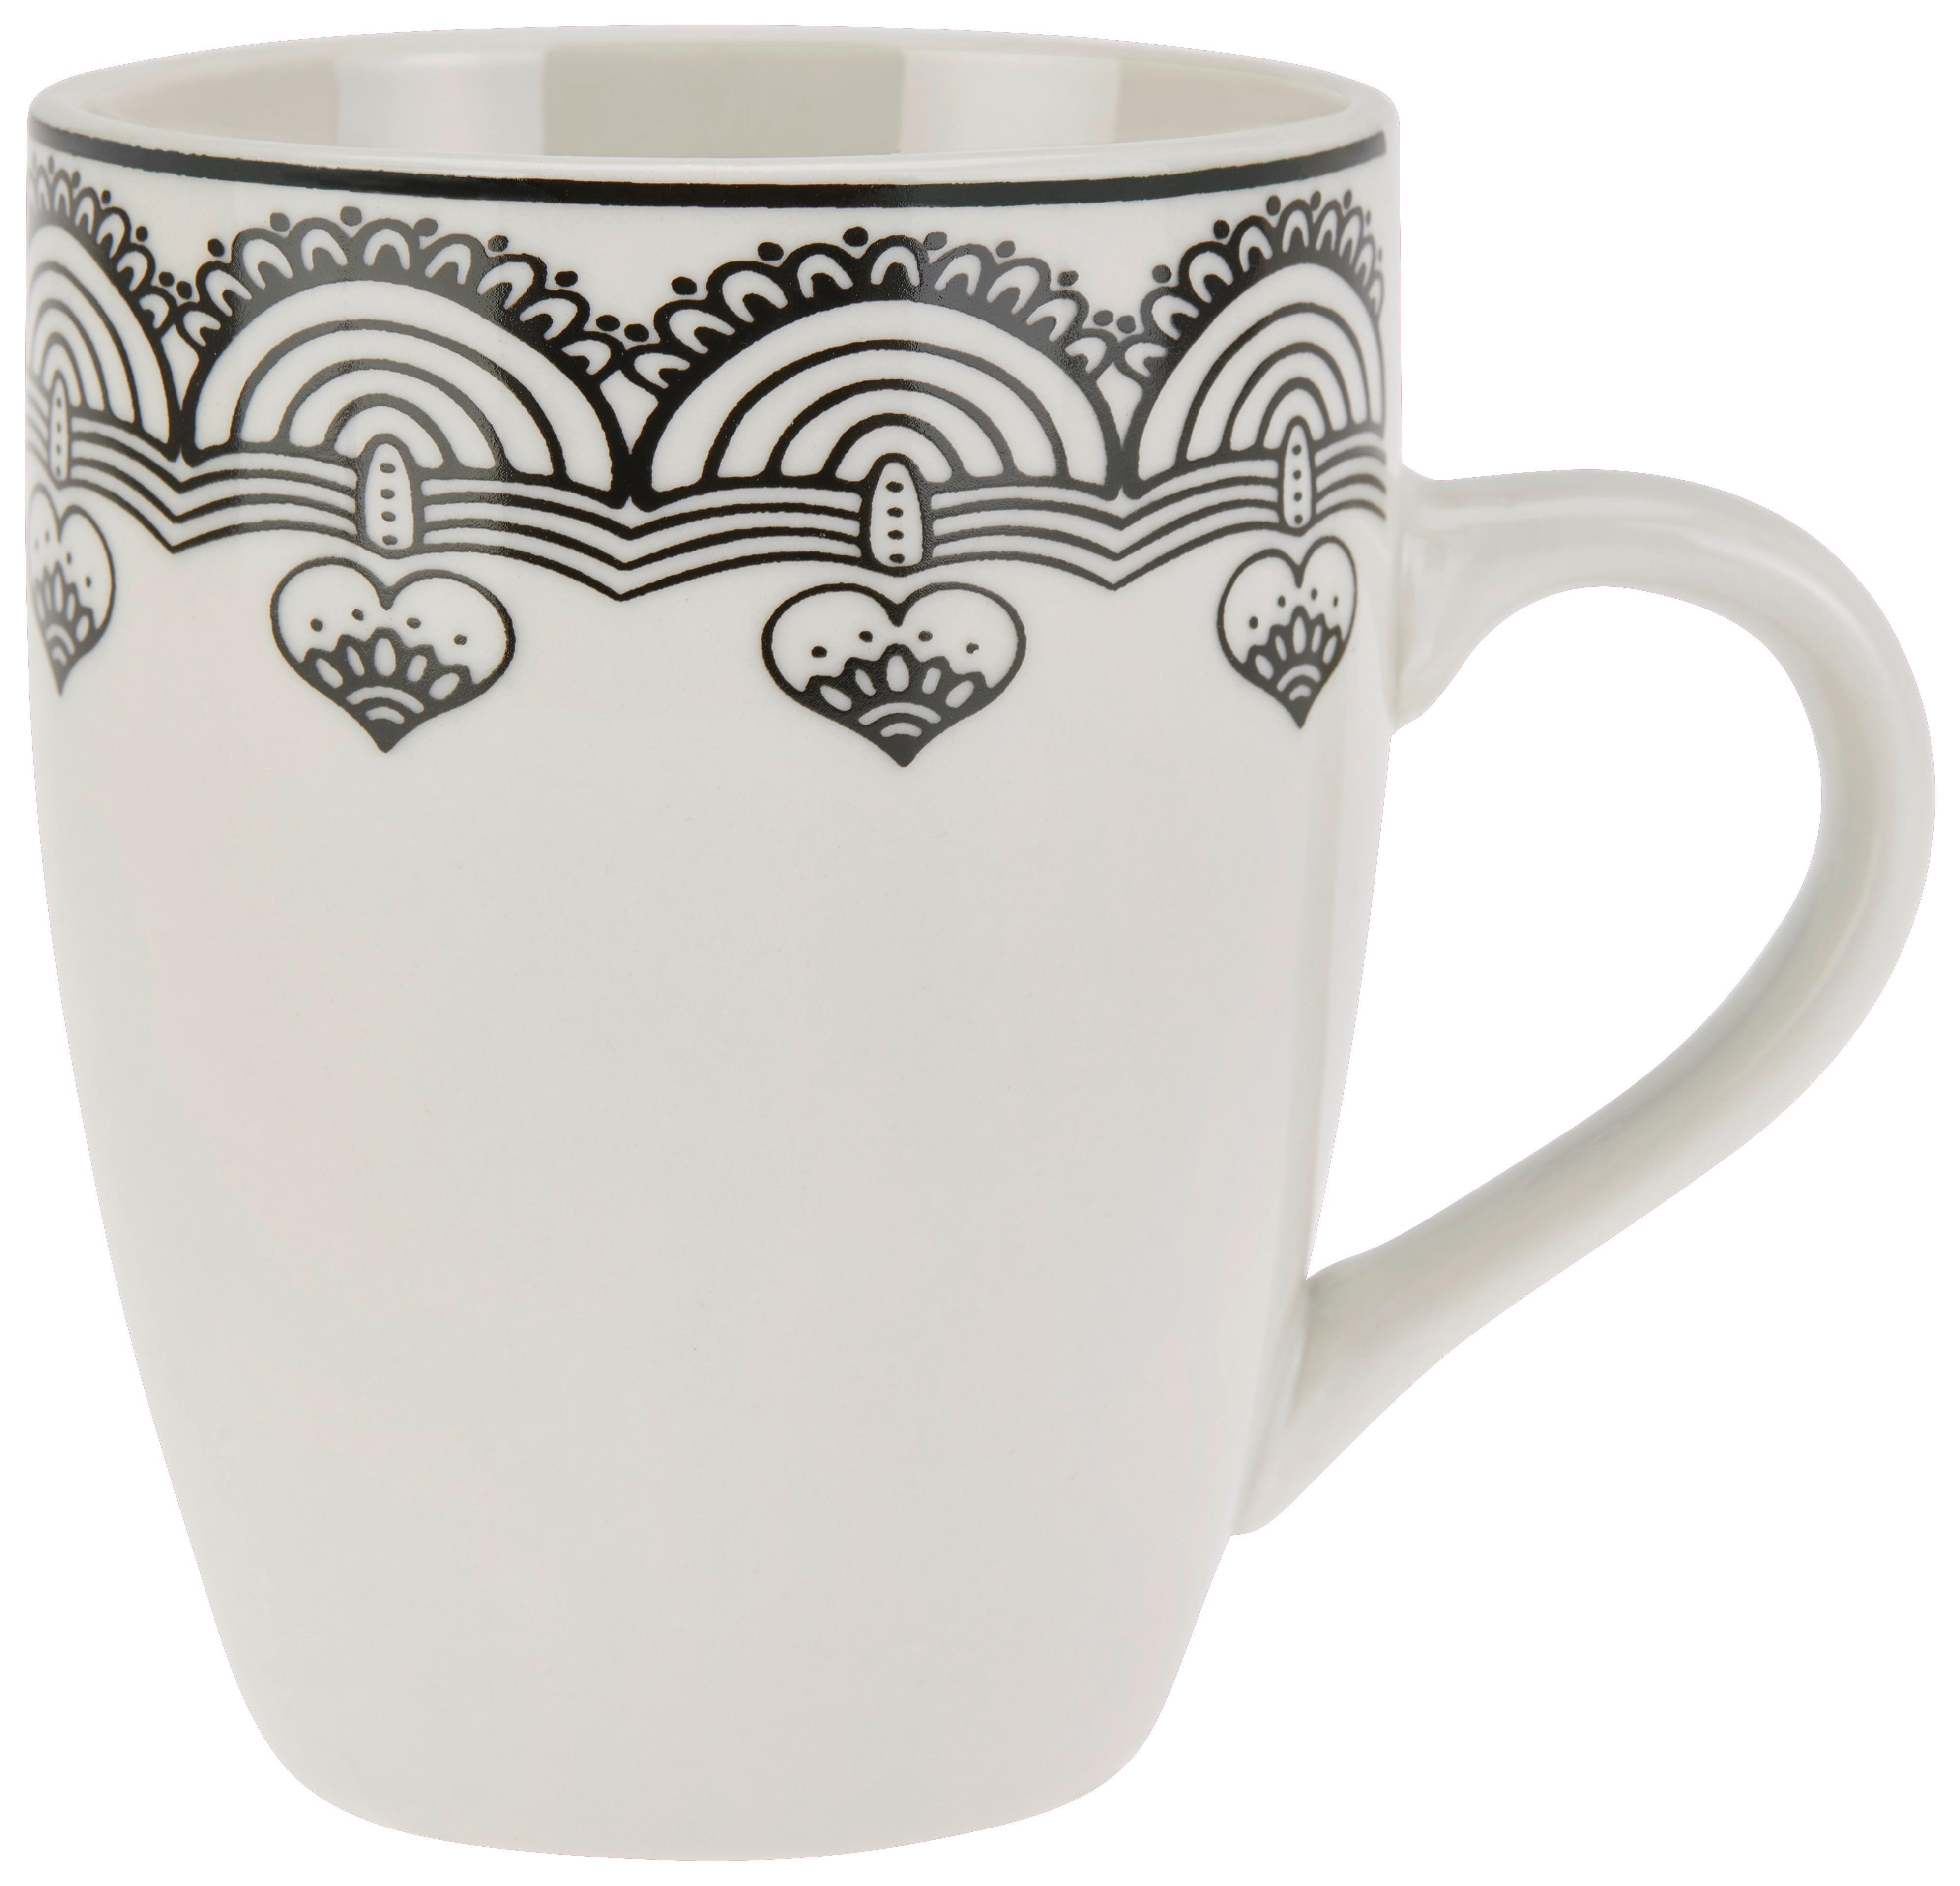 Kaffeebecher Ornament - Schwarz/Weiß, MODERN, Keramik (7,5/9,5cm) - Luca Bessoni